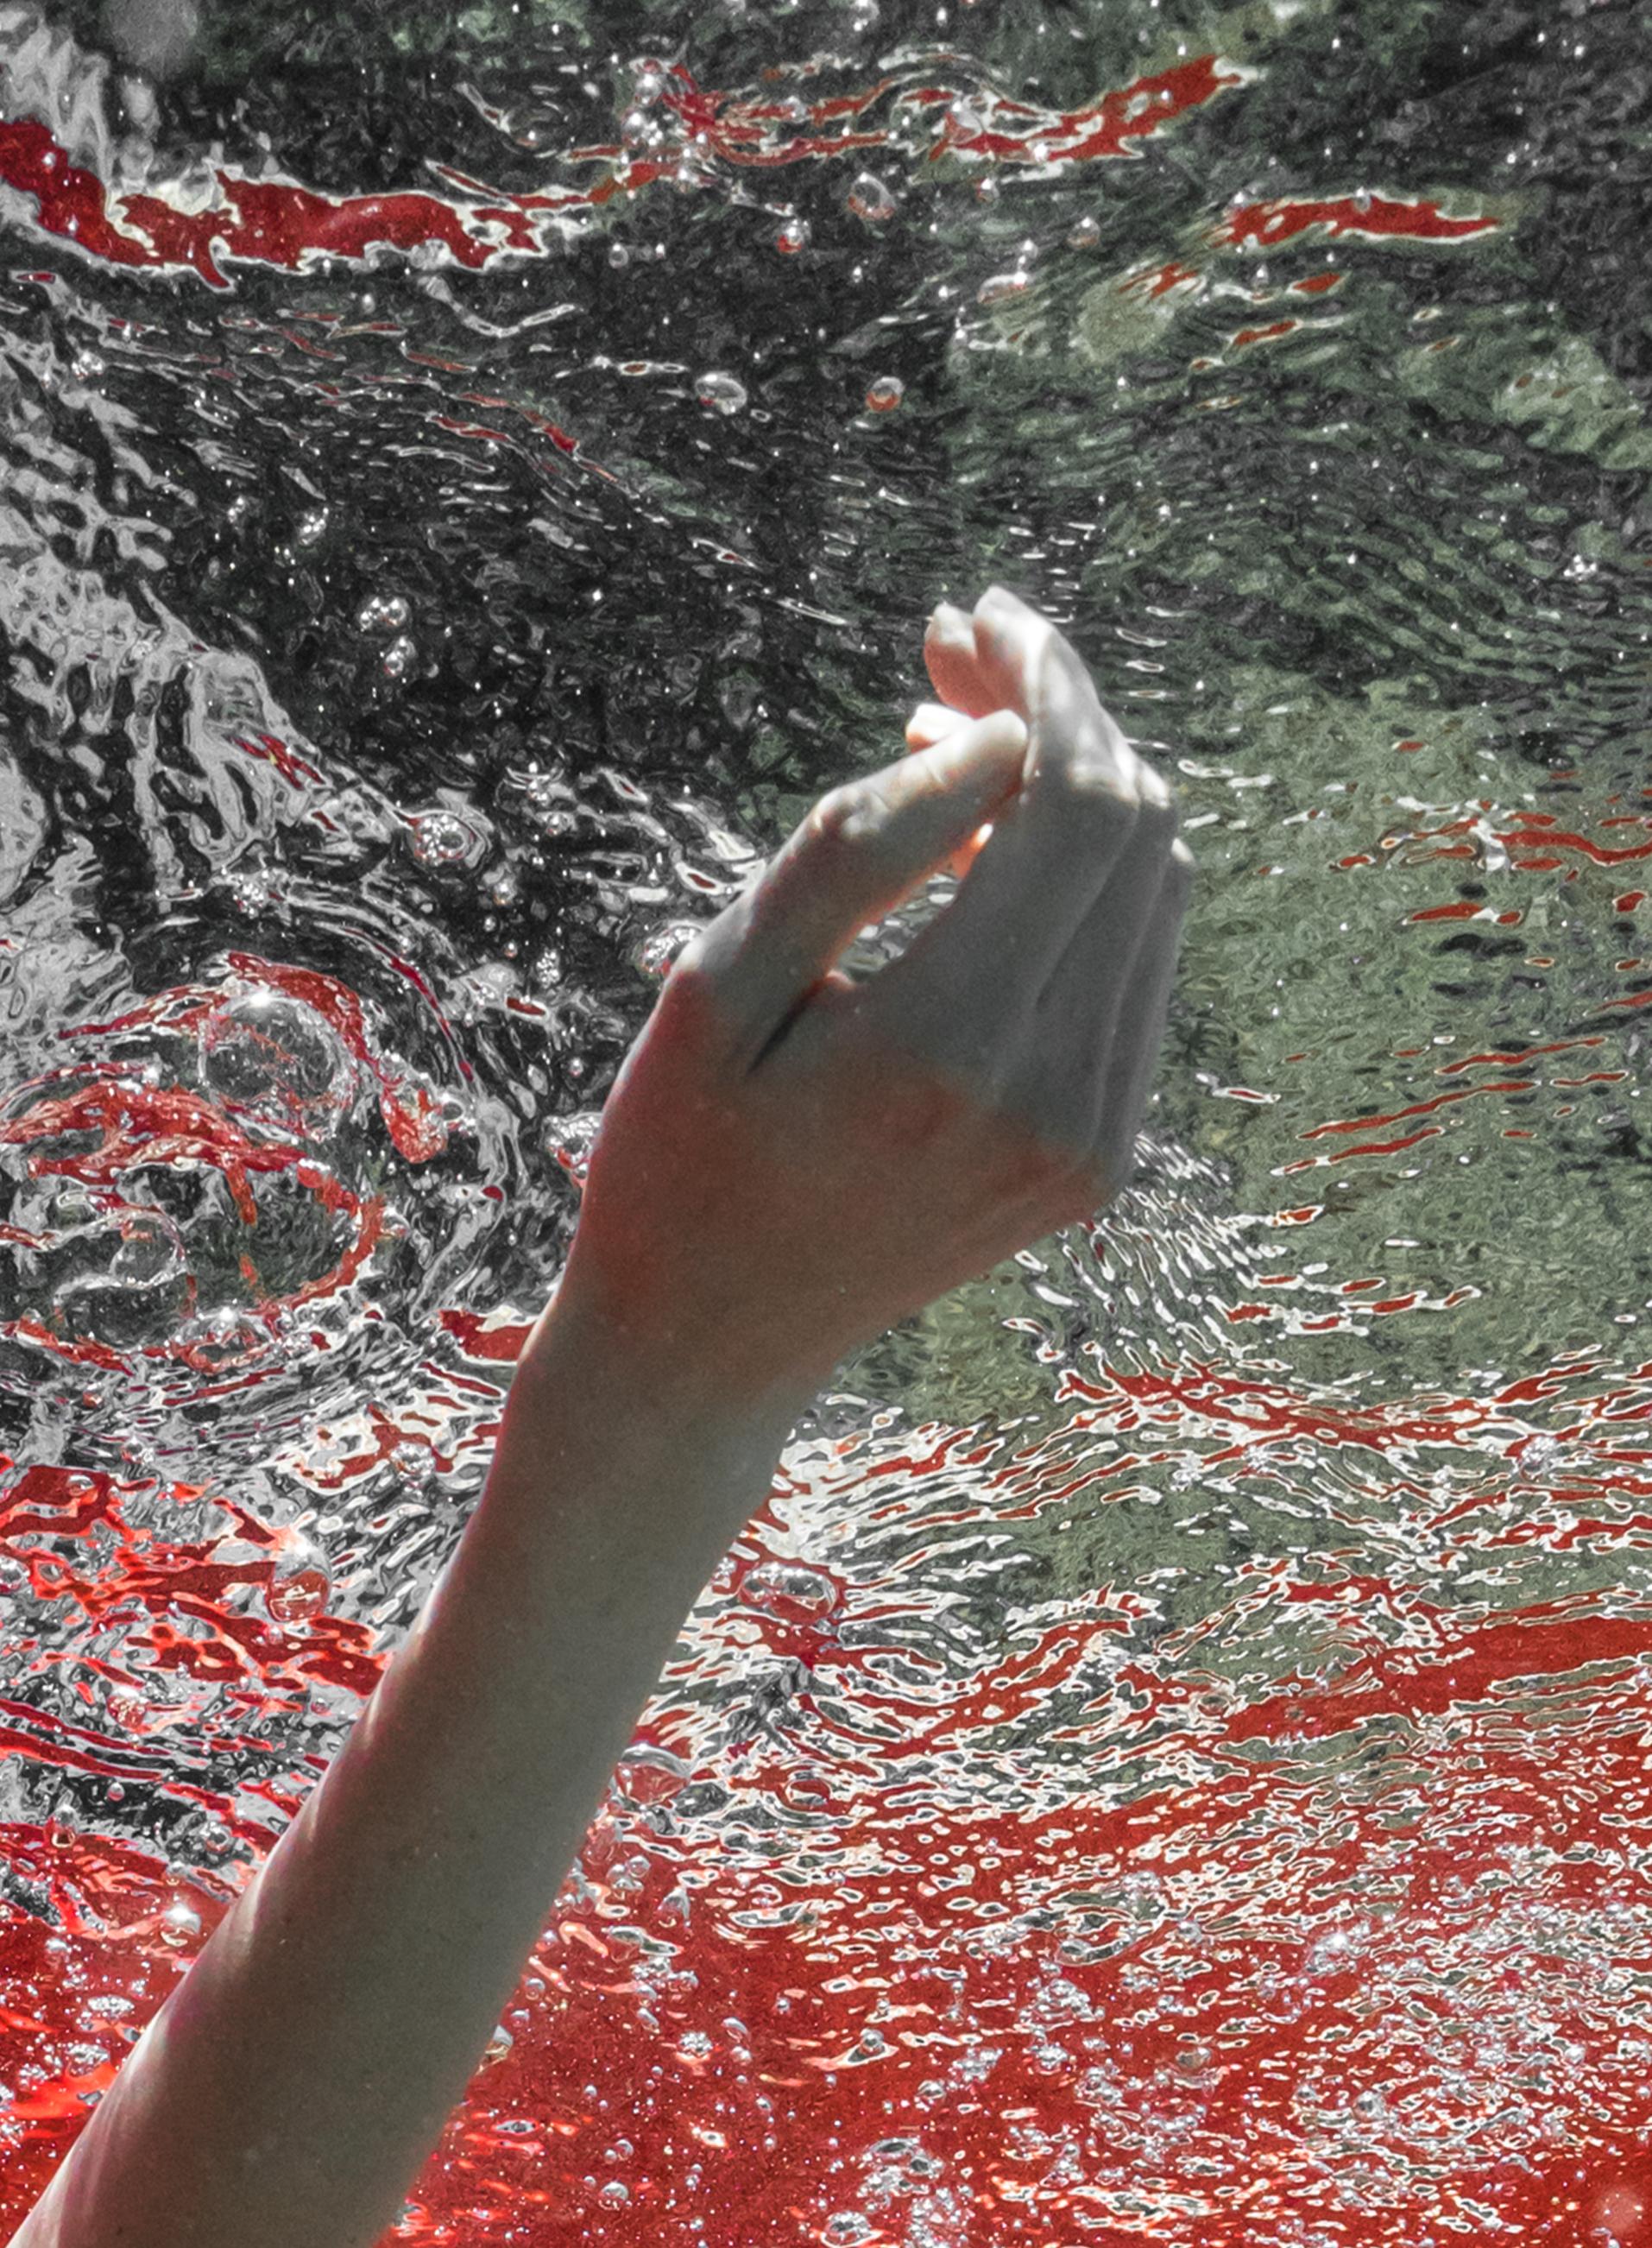 Wild Blood  - underwater nude photograph - archival pigment print 24x18